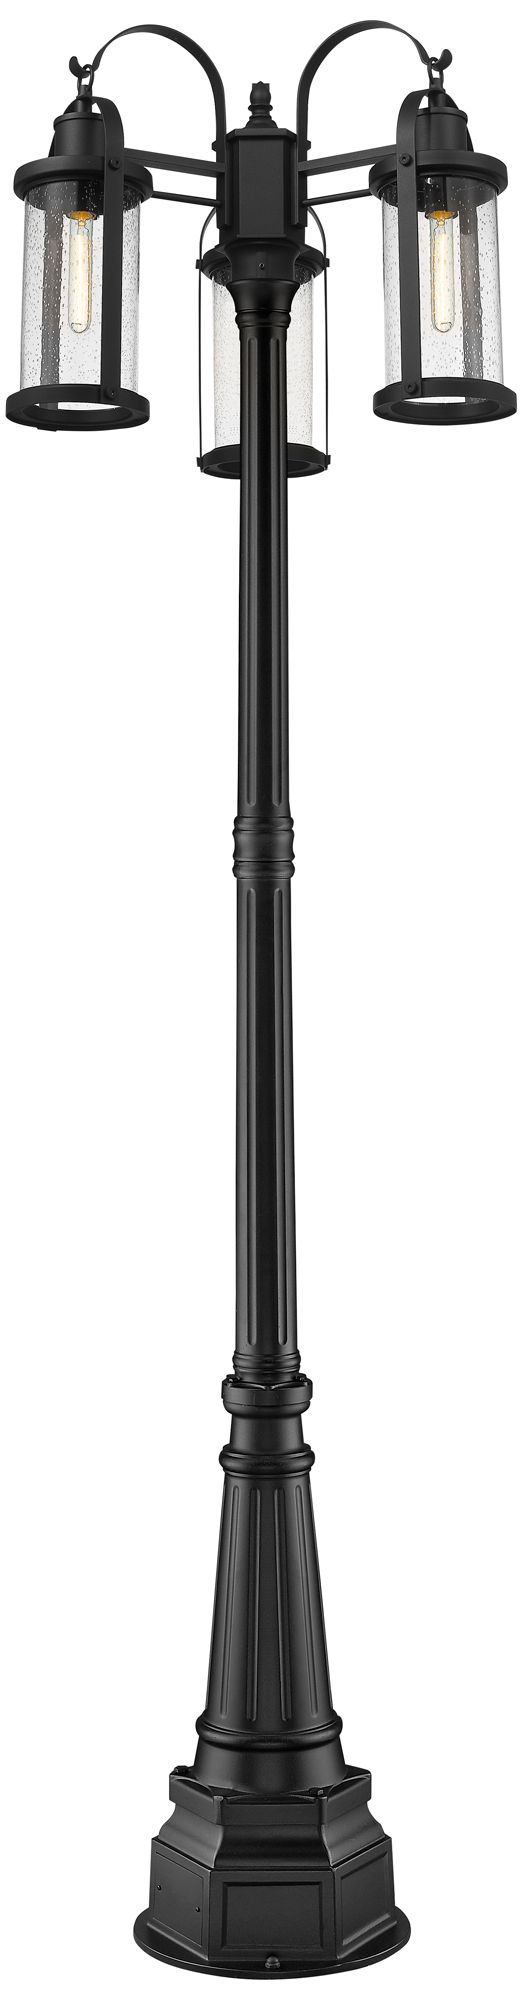 Z-Lite 102.5" High 3-Light Black Finish Traditional Outdoor Post Light